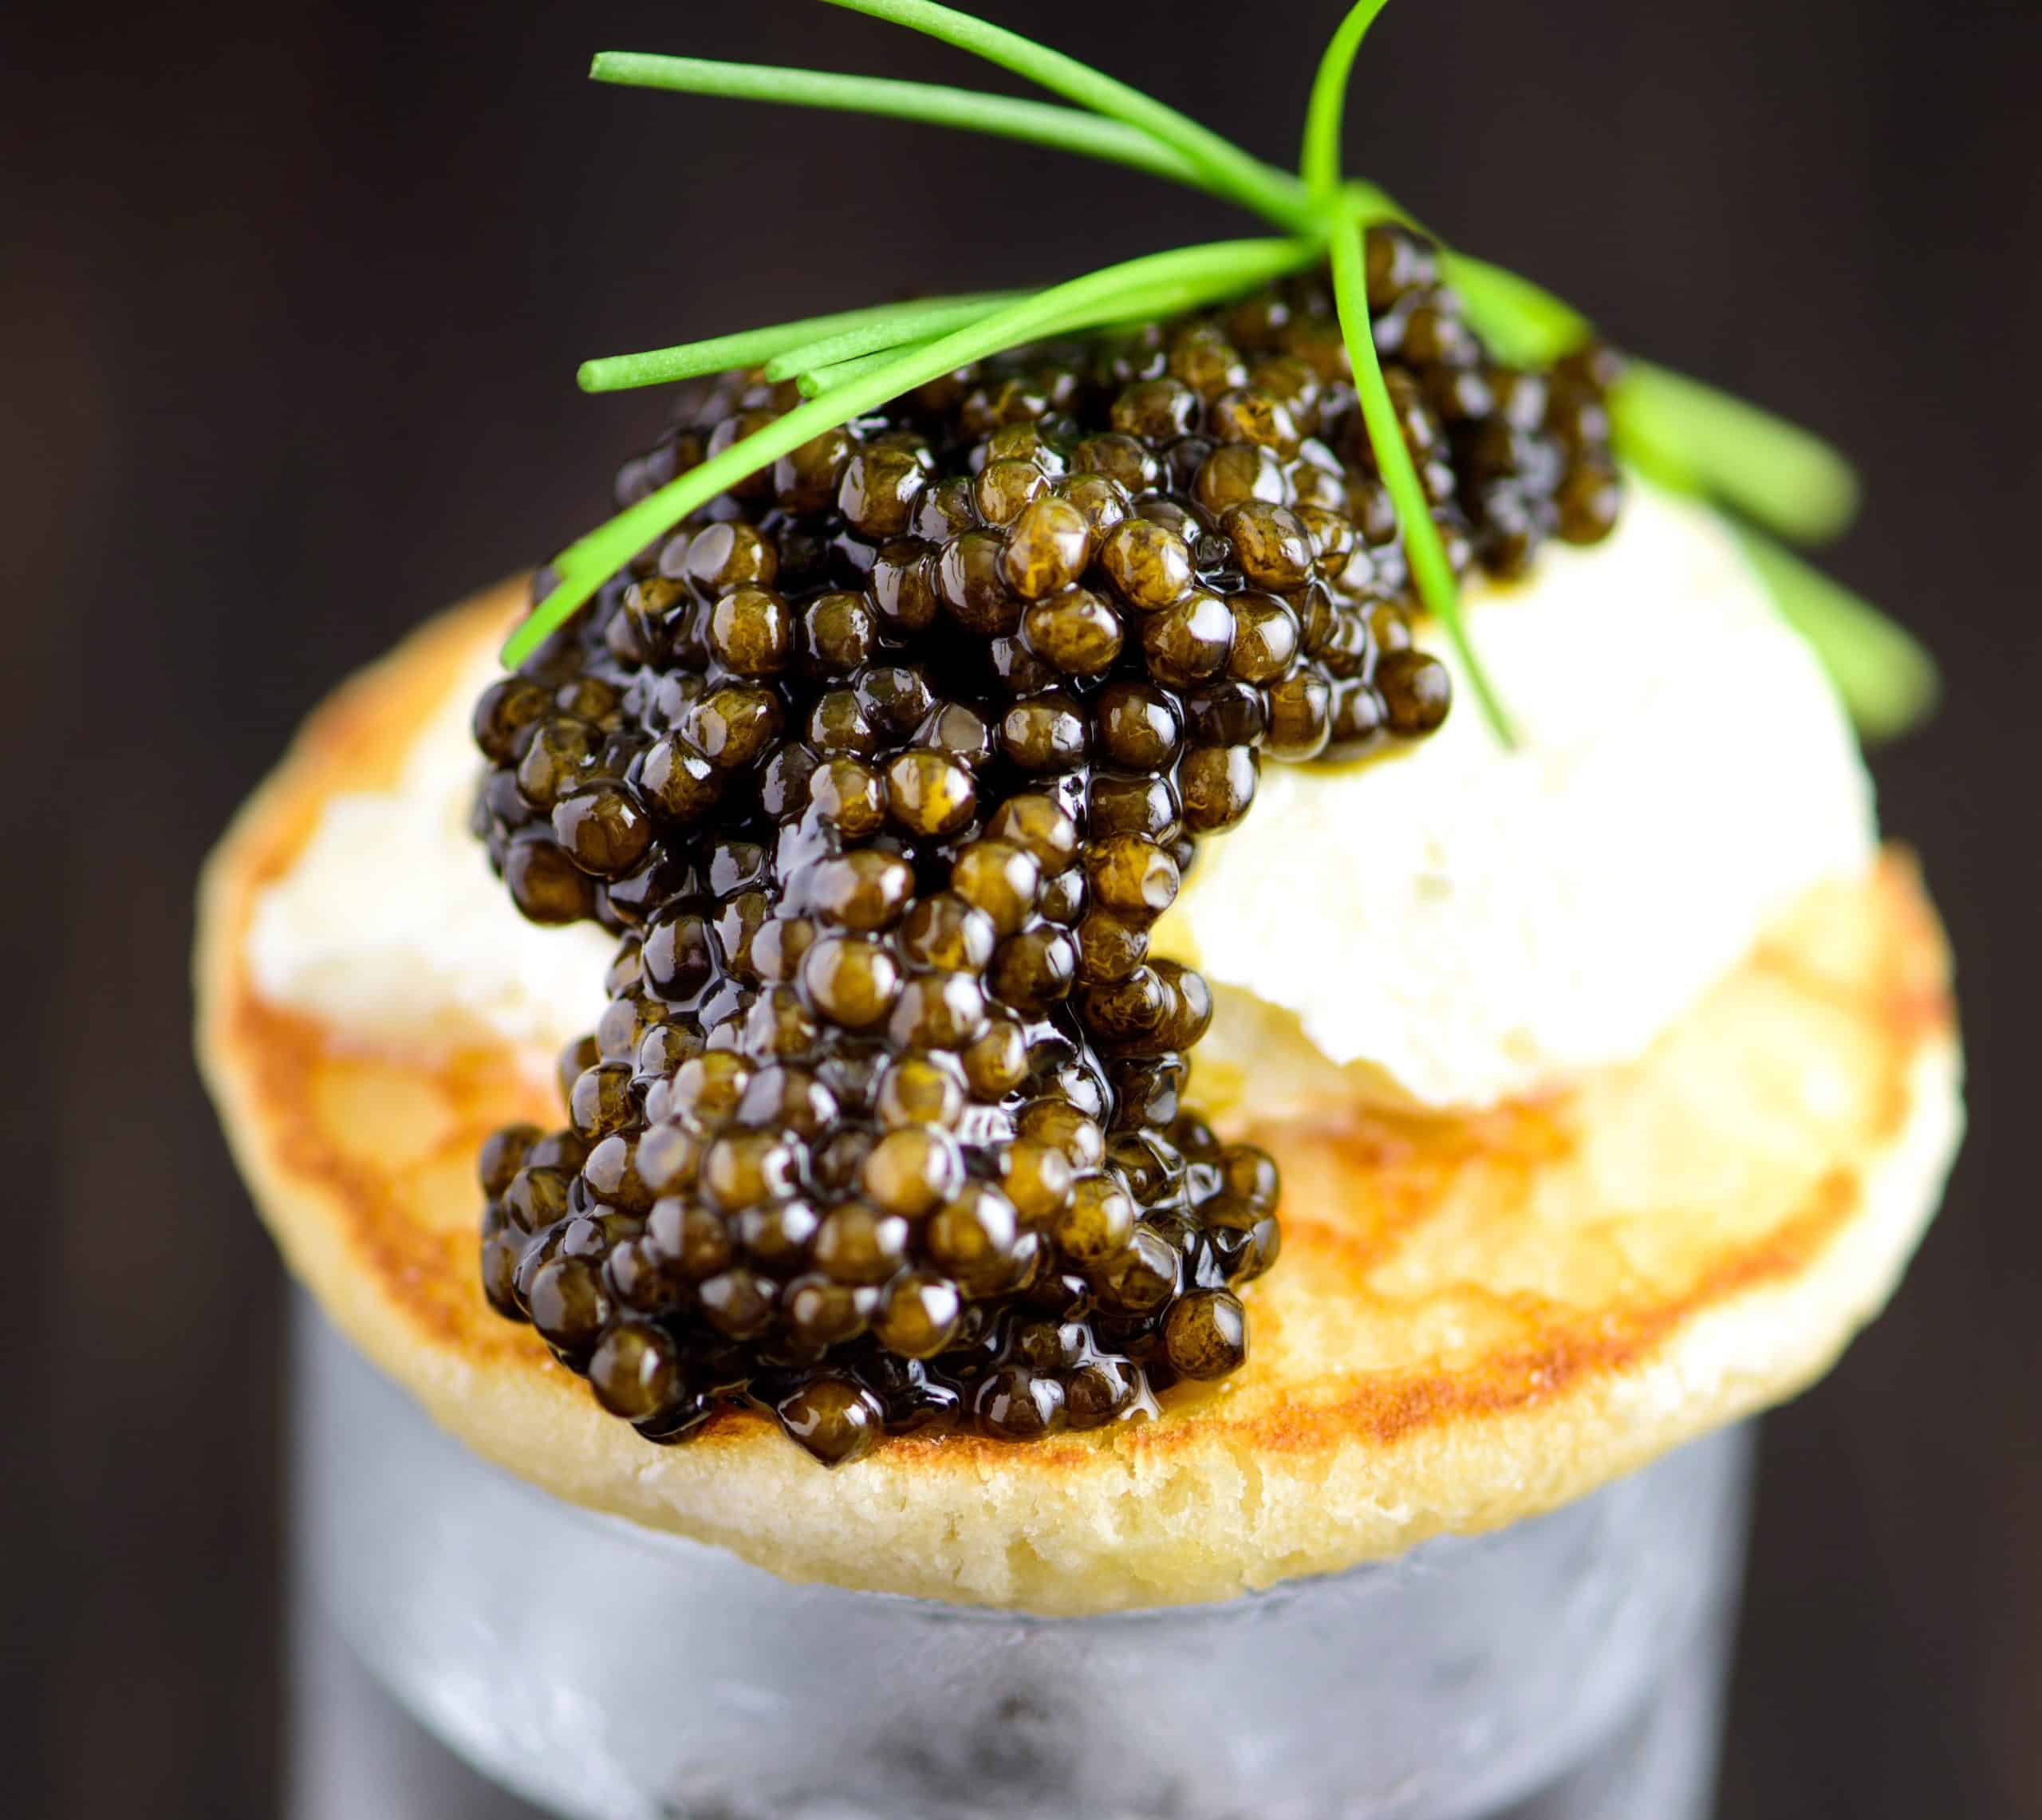 How to eat caviar?